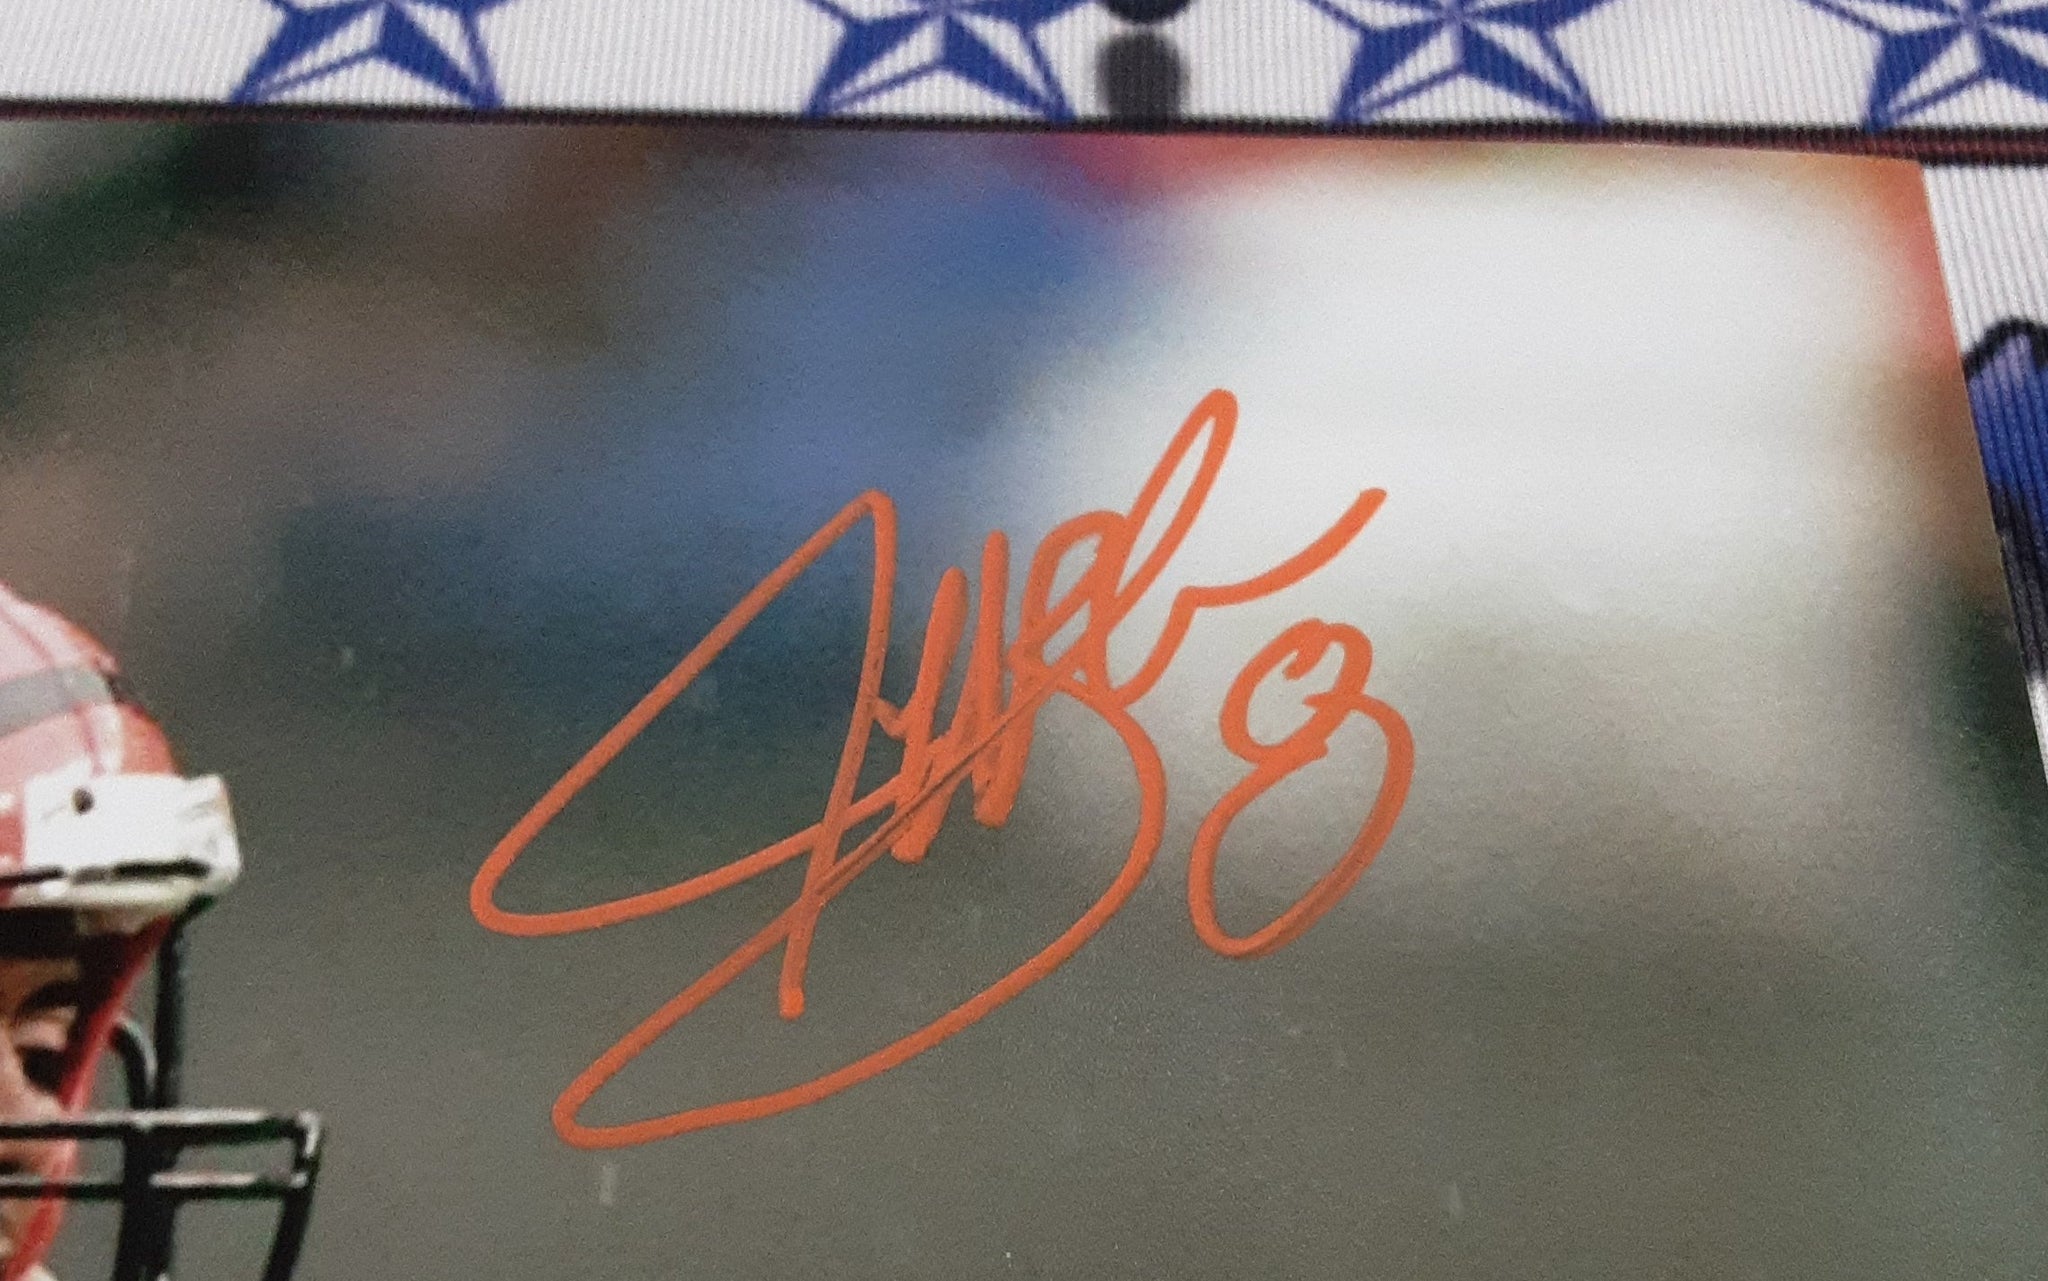 Jeff Blake Authentic Signed 8x10 Photo Autographed.